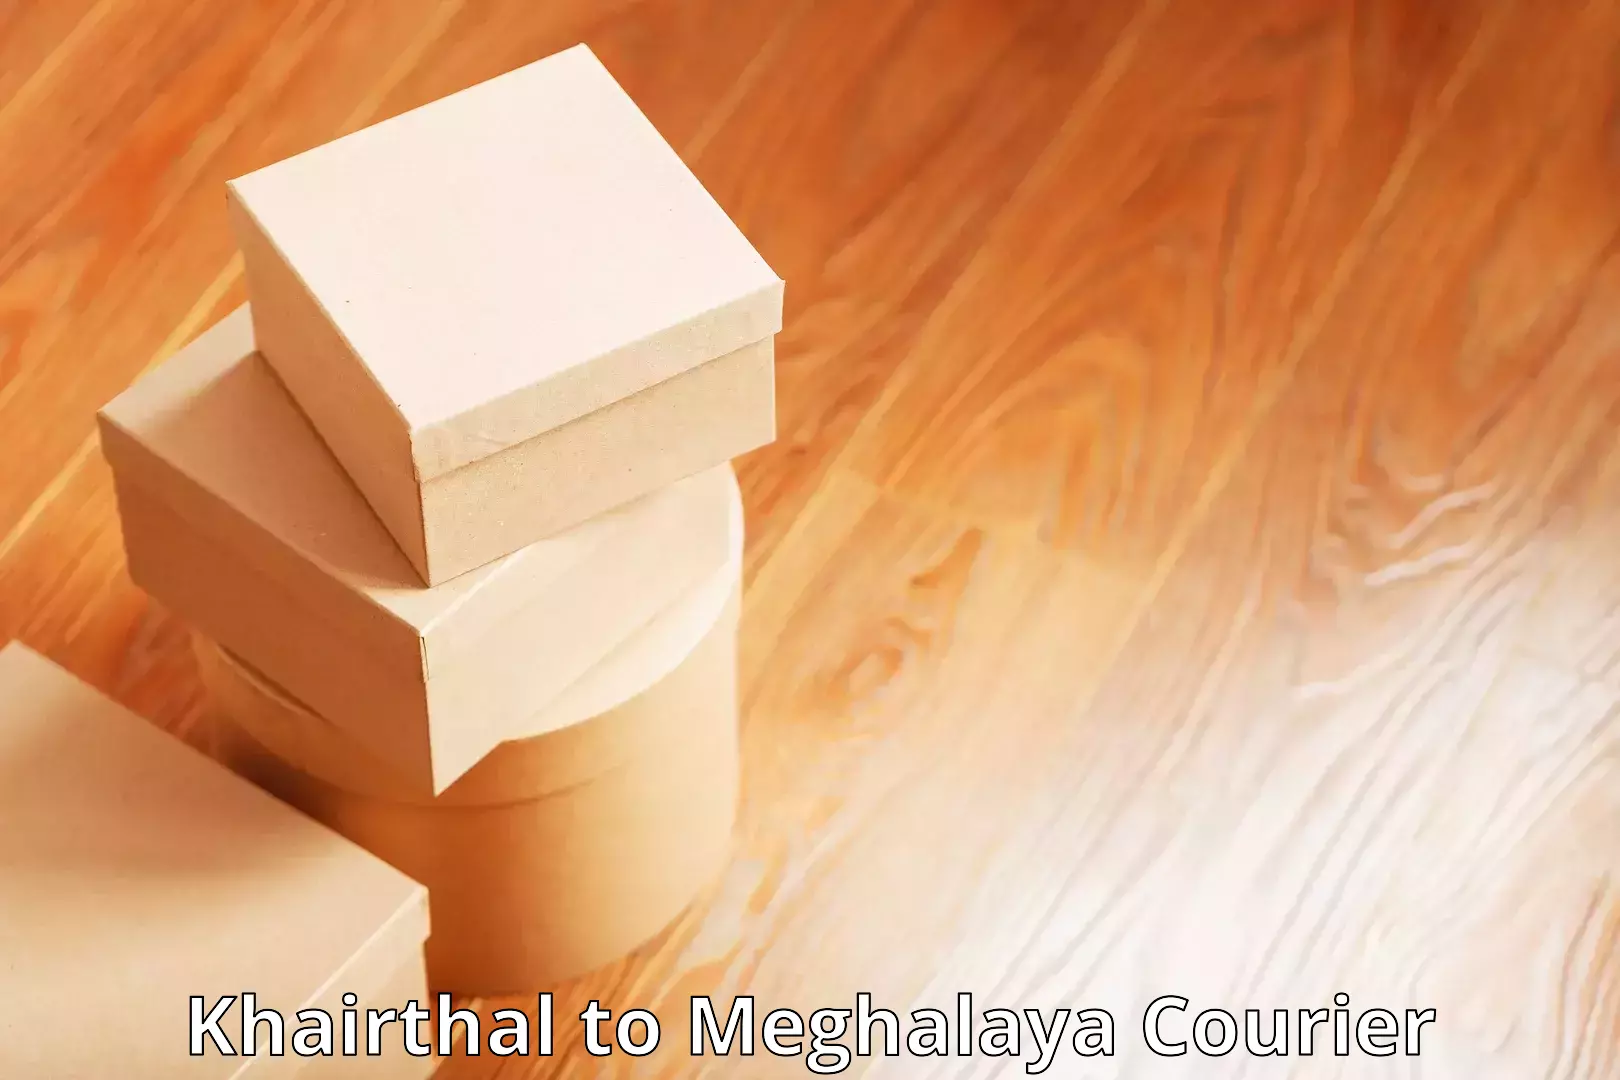 Courier service innovation Khairthal to Meghalaya